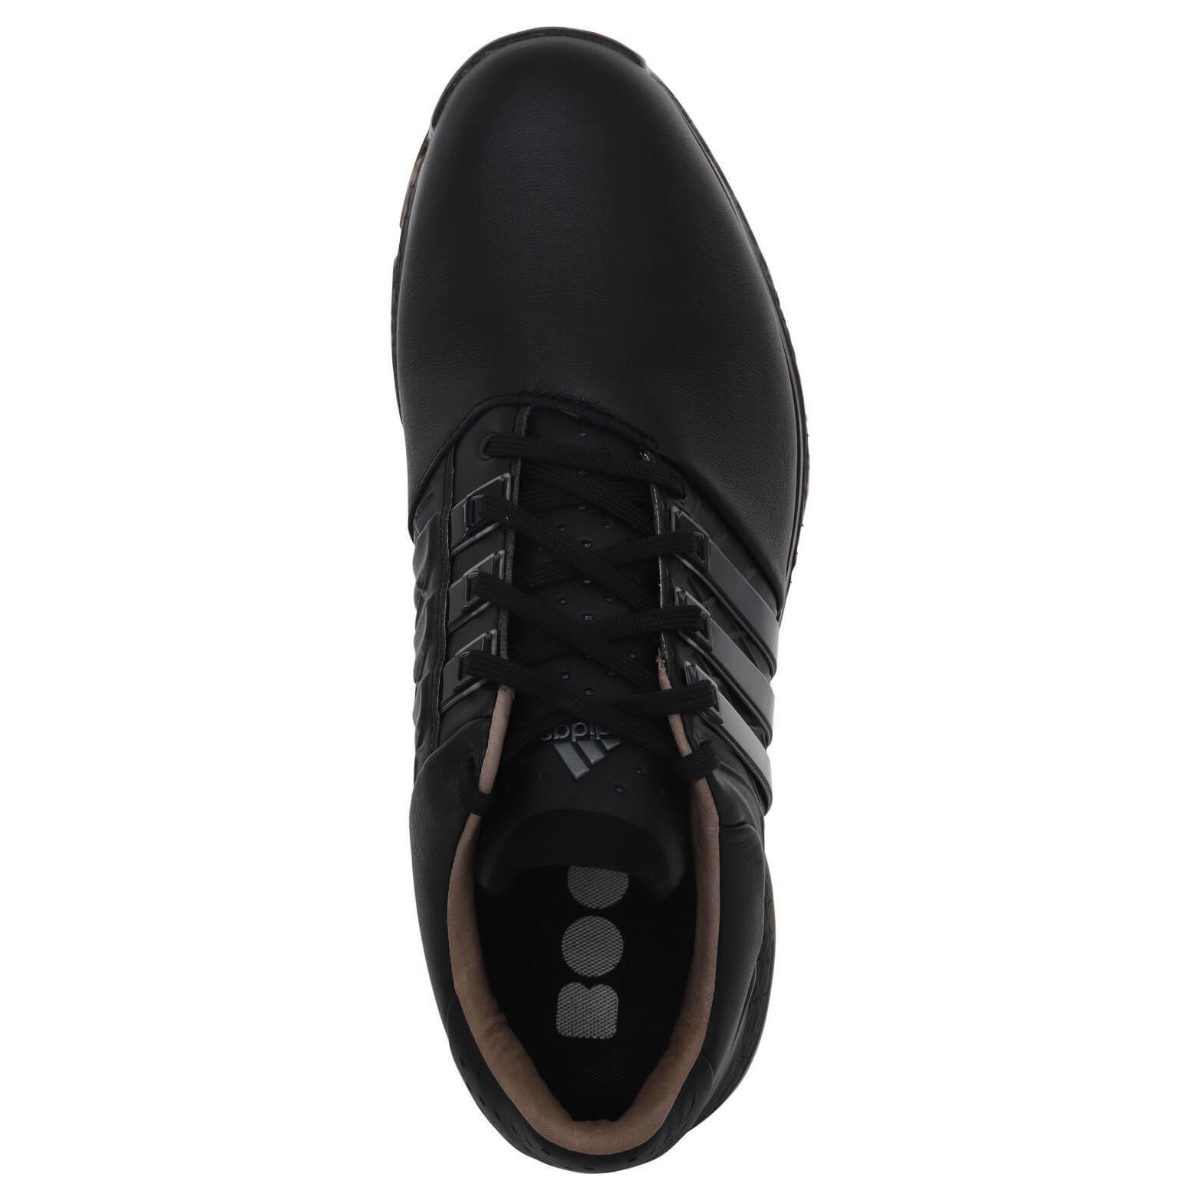 Adidas Tour360 XT-SL 2 Black/Black Herren